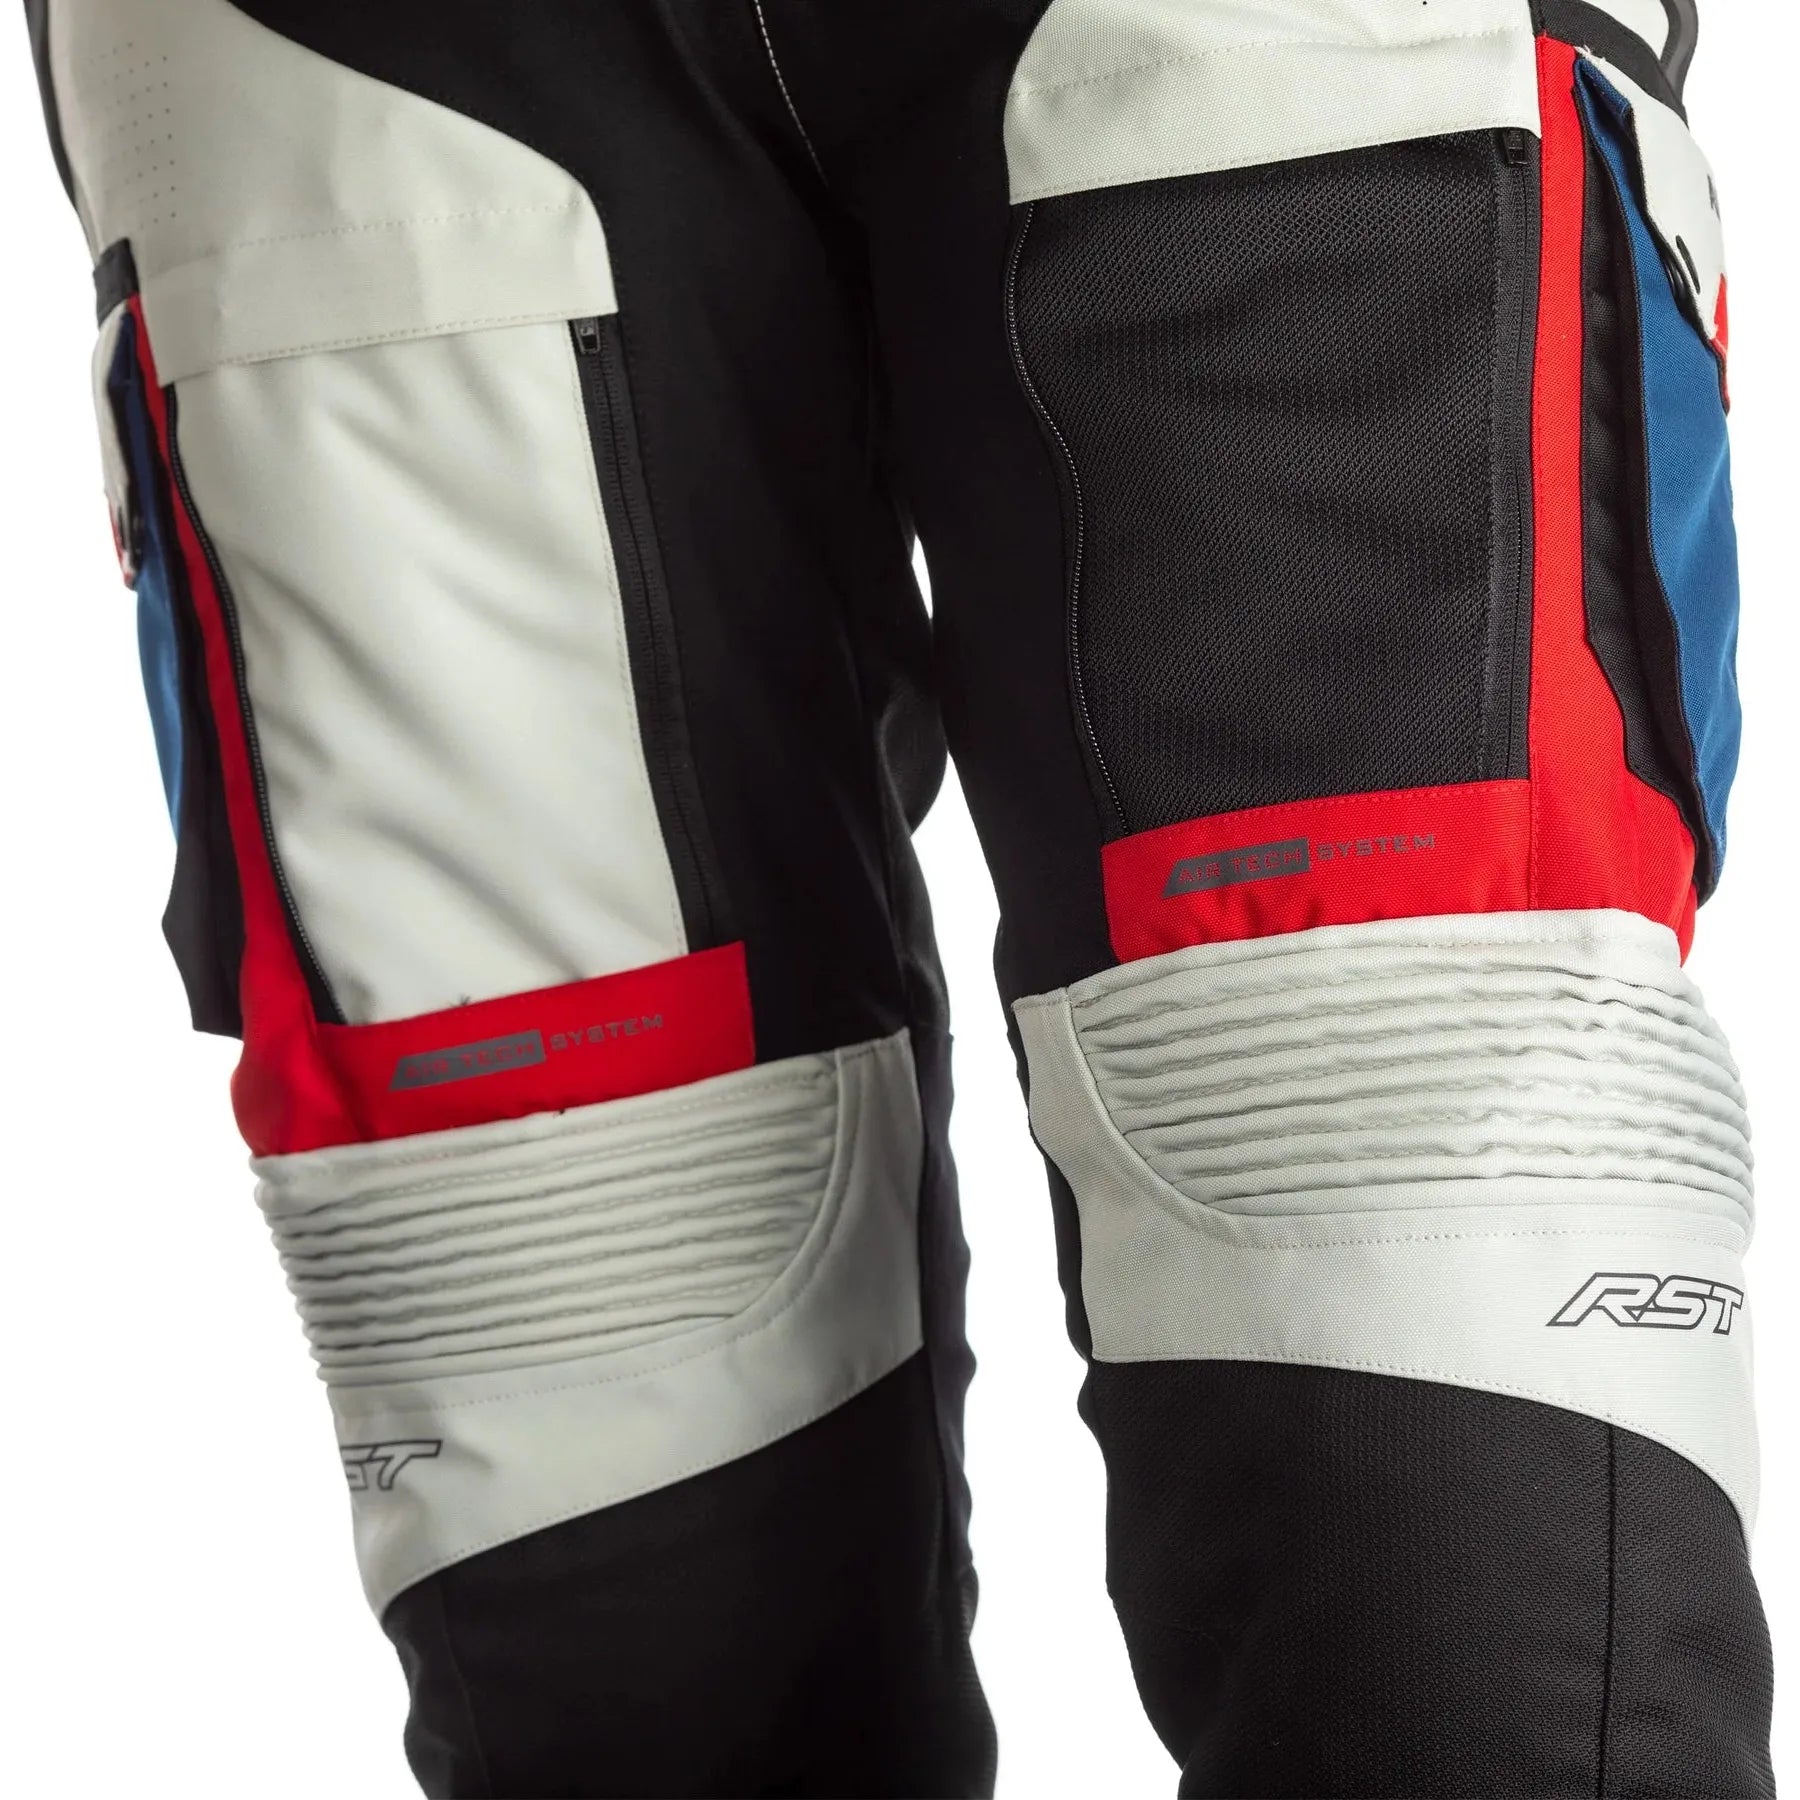 RST Adventure-X CE pantalon homme Ice/Blue/Red L/54 - EdTools